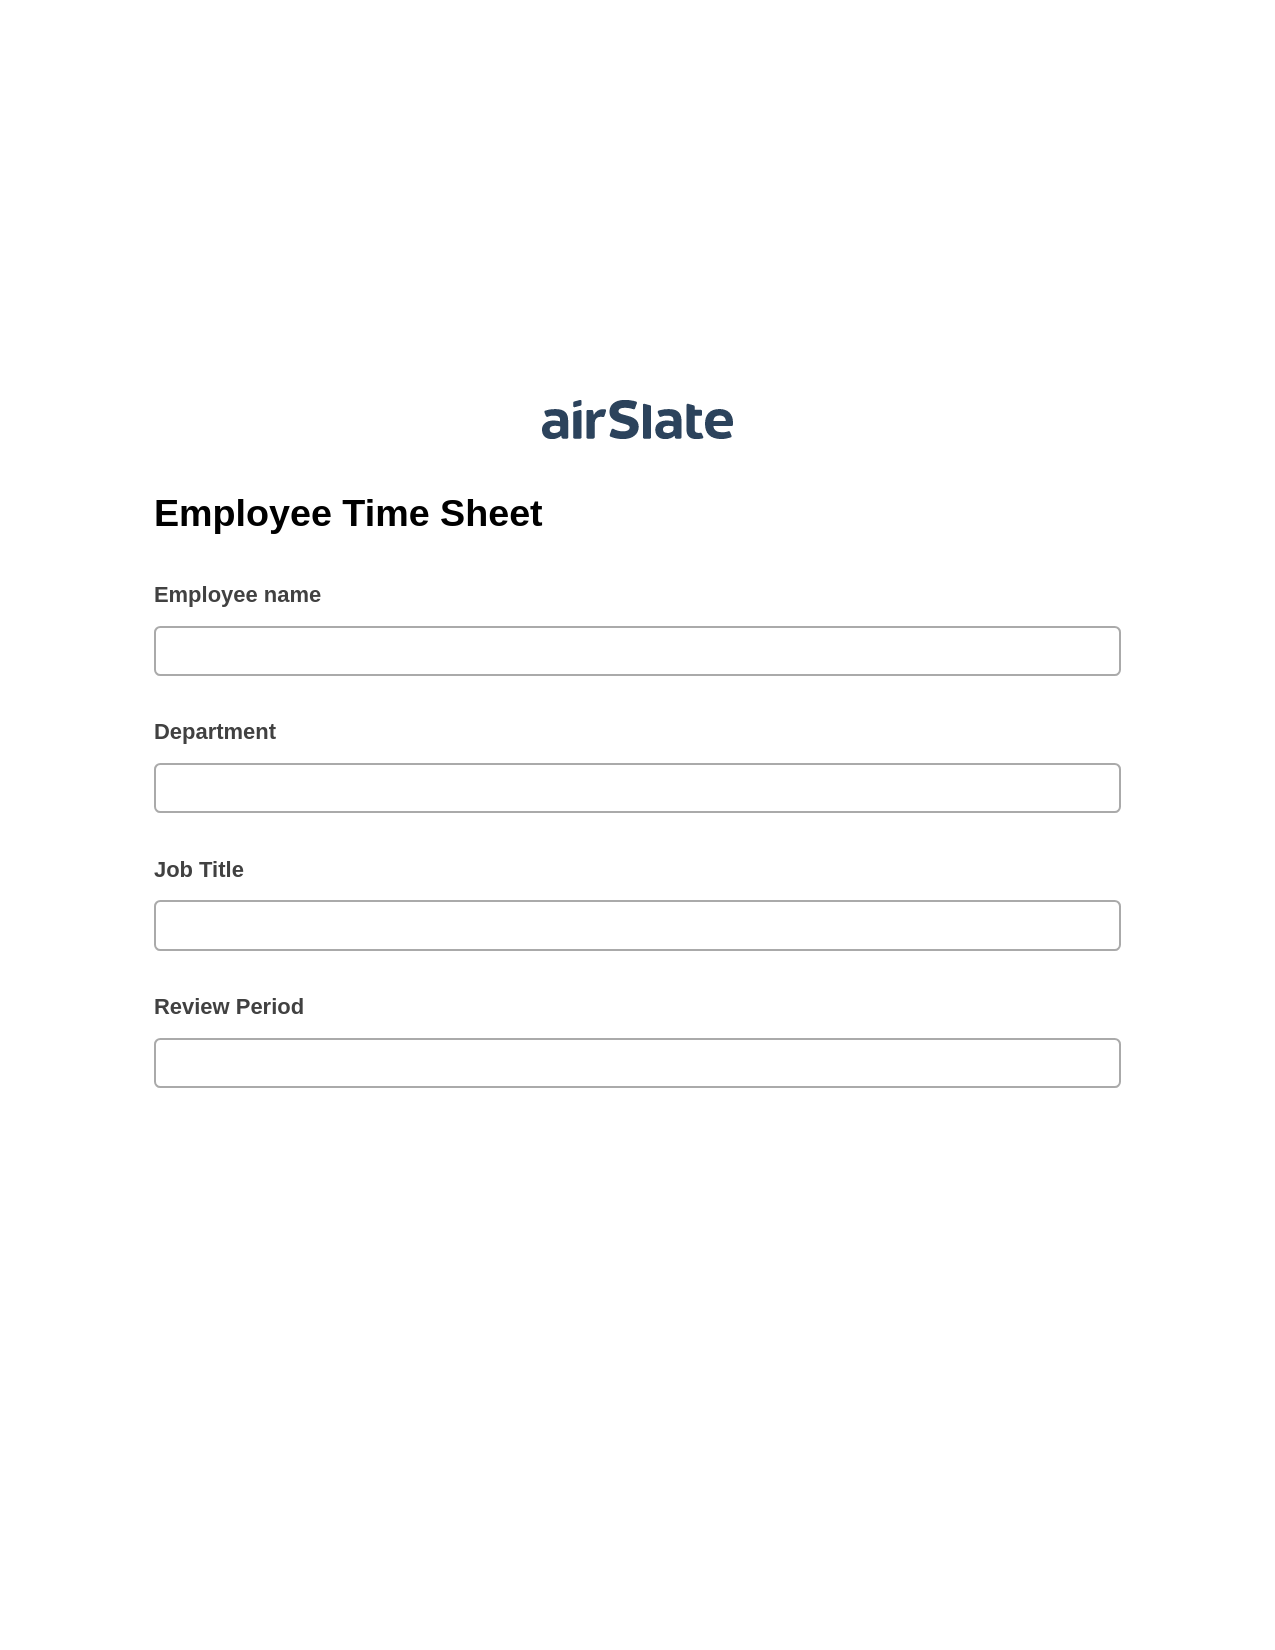 Multirole Employee Time Sheet Pre-fill from MS Dynamics 365 Records, Create Slate Reminder Bot, Slack Notification Postfinish Bot